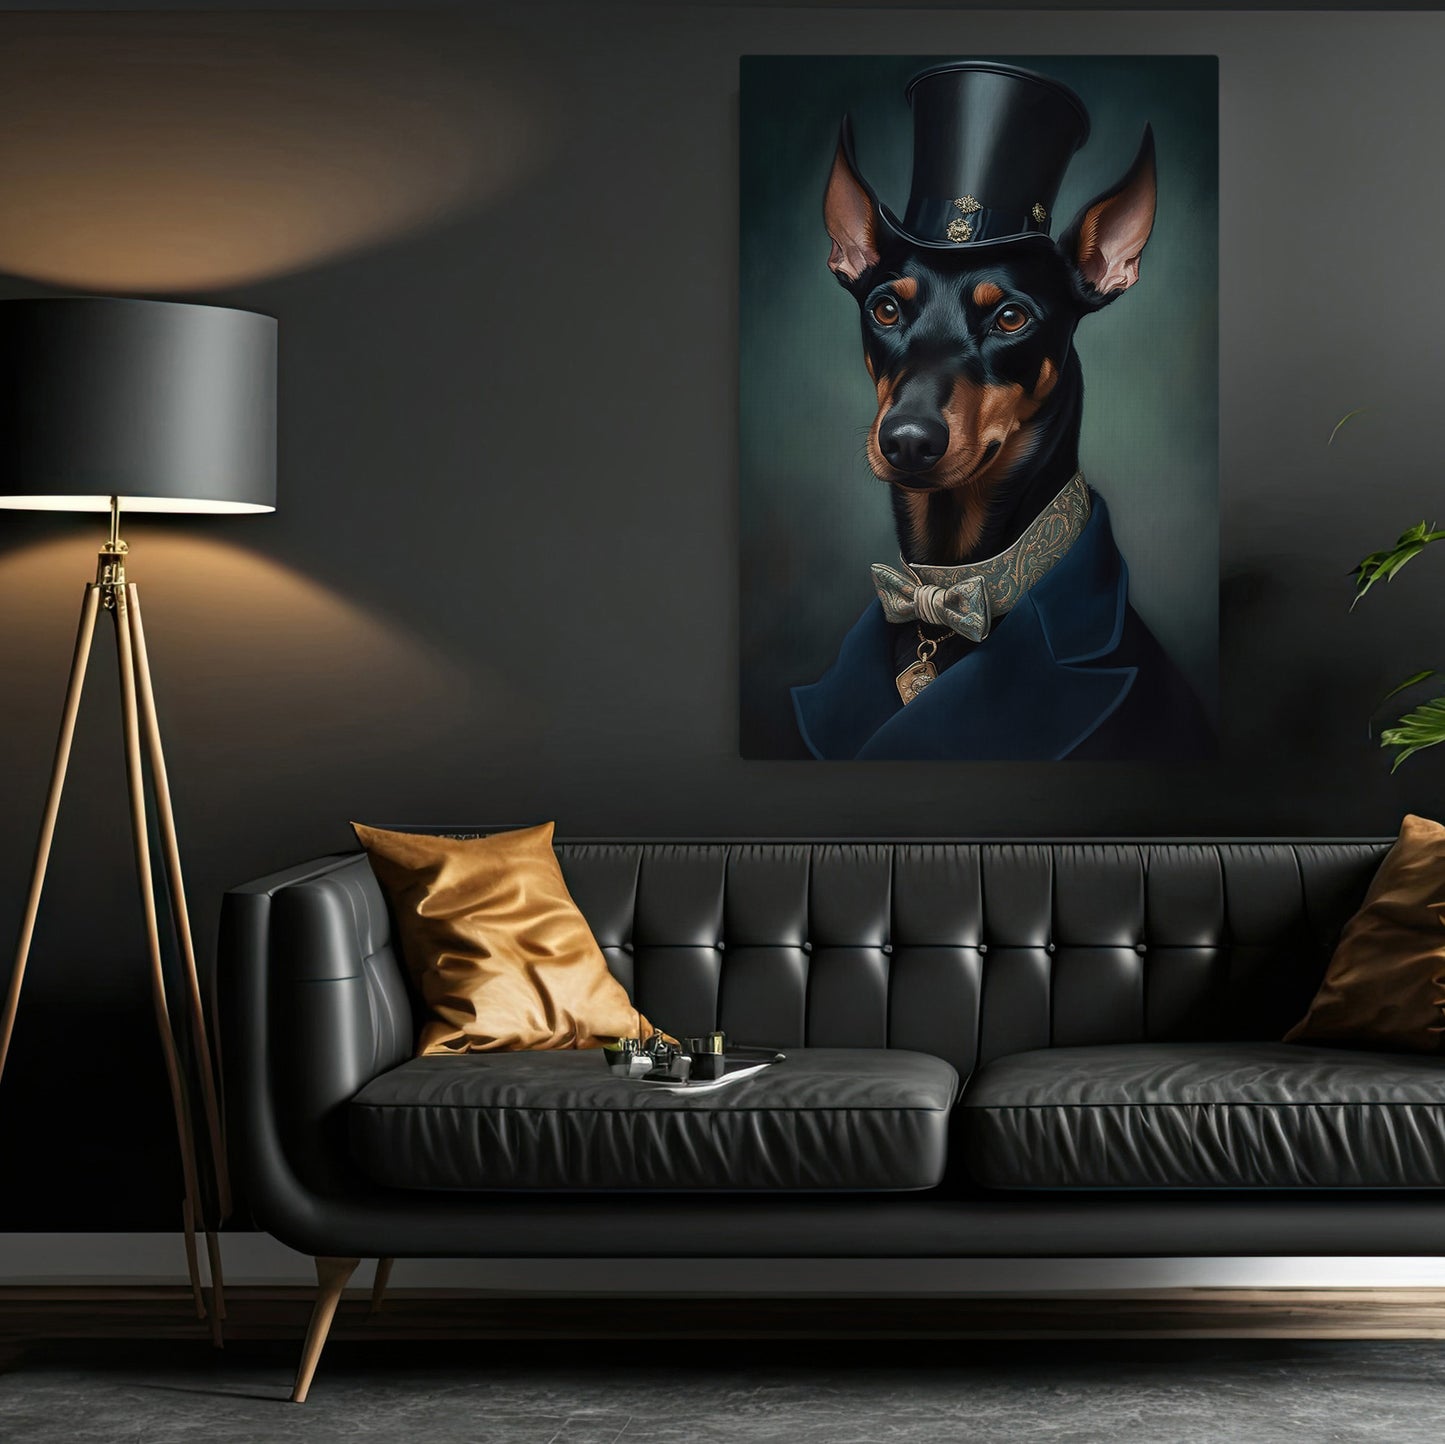 Doberman Pinscher In Victorian Style, Victorian Dog Canvas Painting, Victorian Animal Wall Art Decor, Poster Gift For Doberman Pinscher Dog Lovers